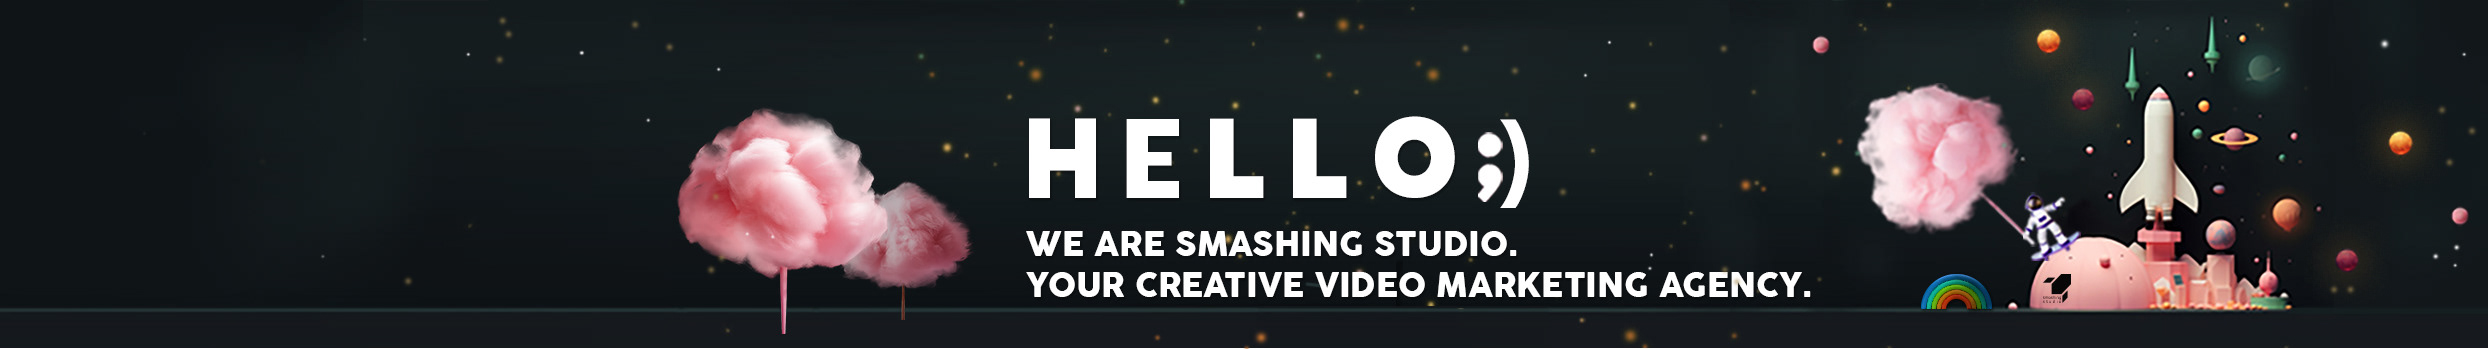 Smashing Studio's profile banner